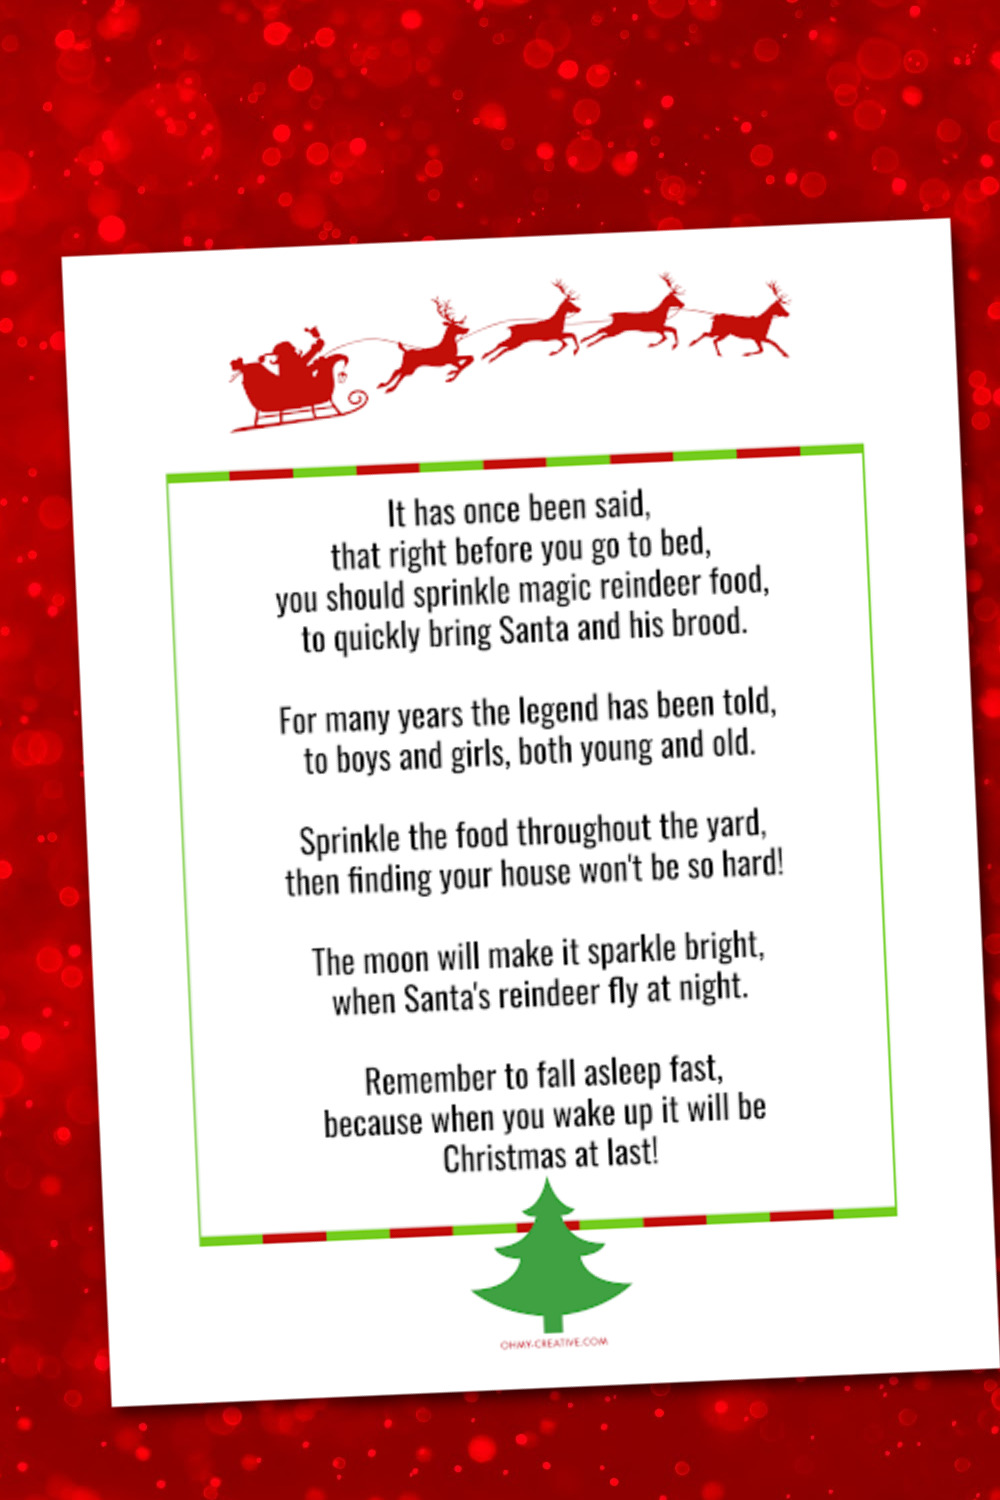 A free printable Reindeer Food Poem - a fun Christmas Eve Tradition!